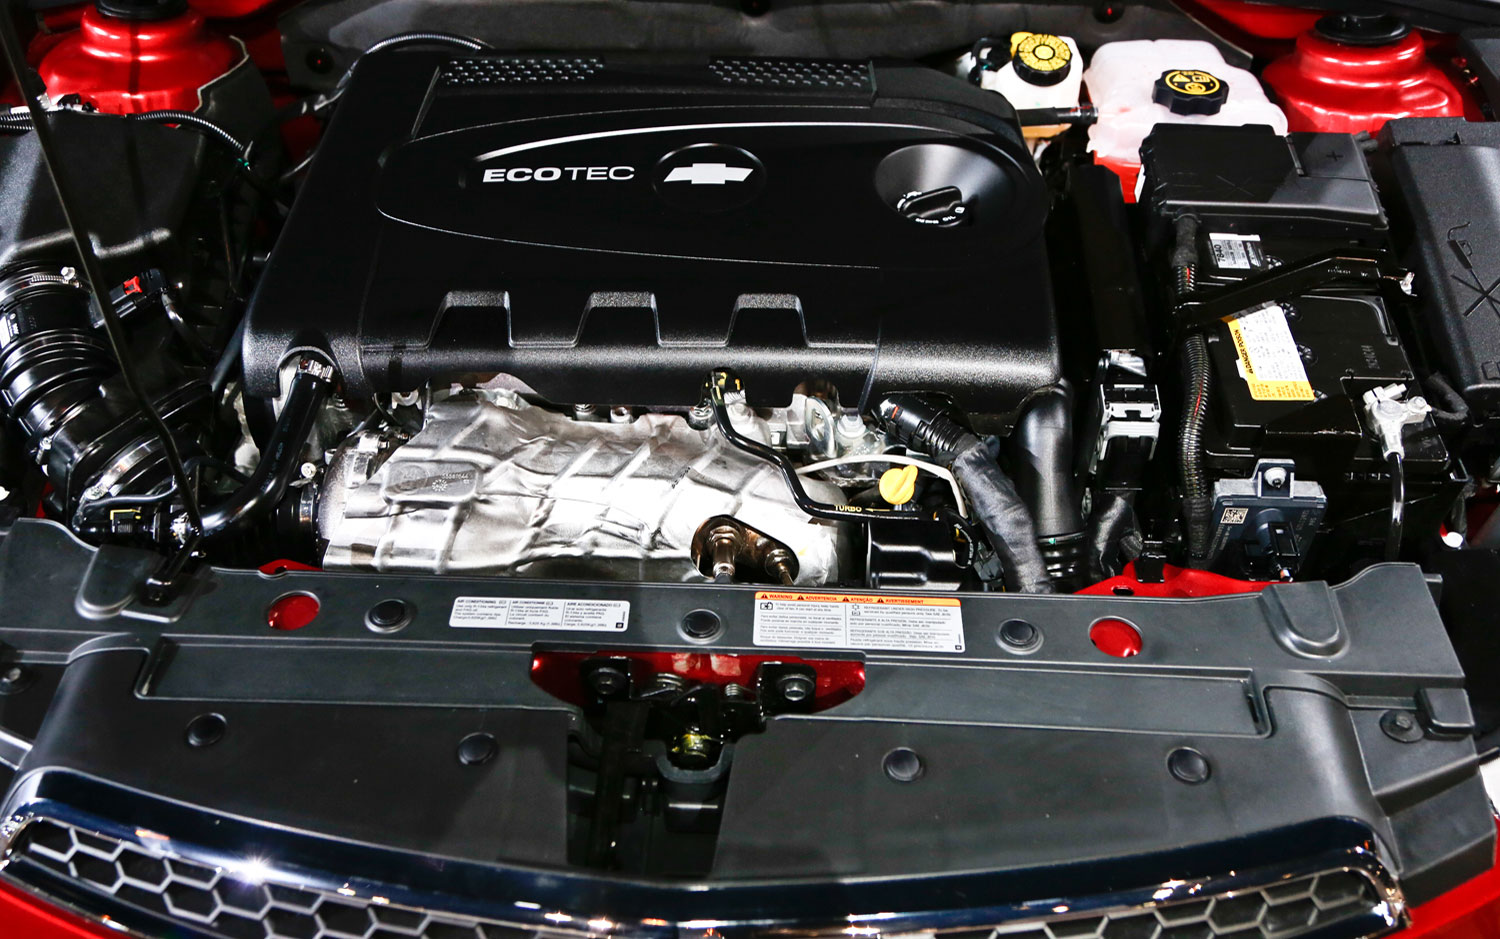 Ремонт двигателя круз. Мотор Шевроле Круз 1.4 турбо. Chevrolet Cruze 2014 двигатель. Двигатель на Шевроле Круз 2.0 турбо. Двигатель Шевроле Круз 2014 1,4 турбо.